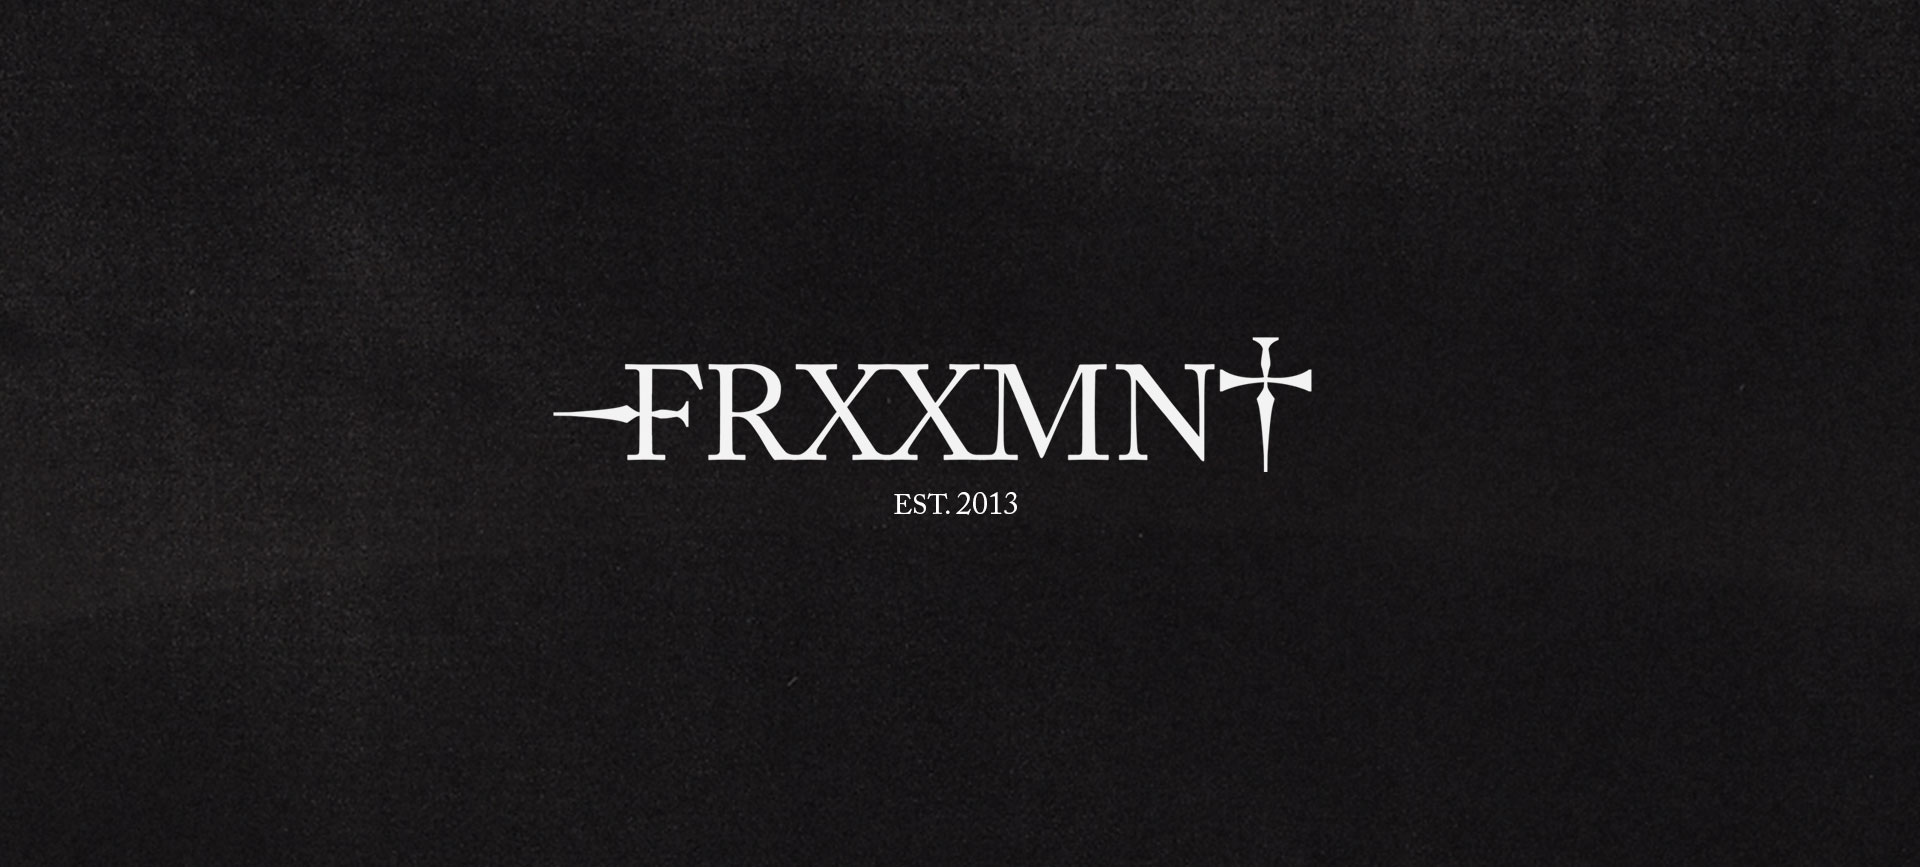 FRXXMNT